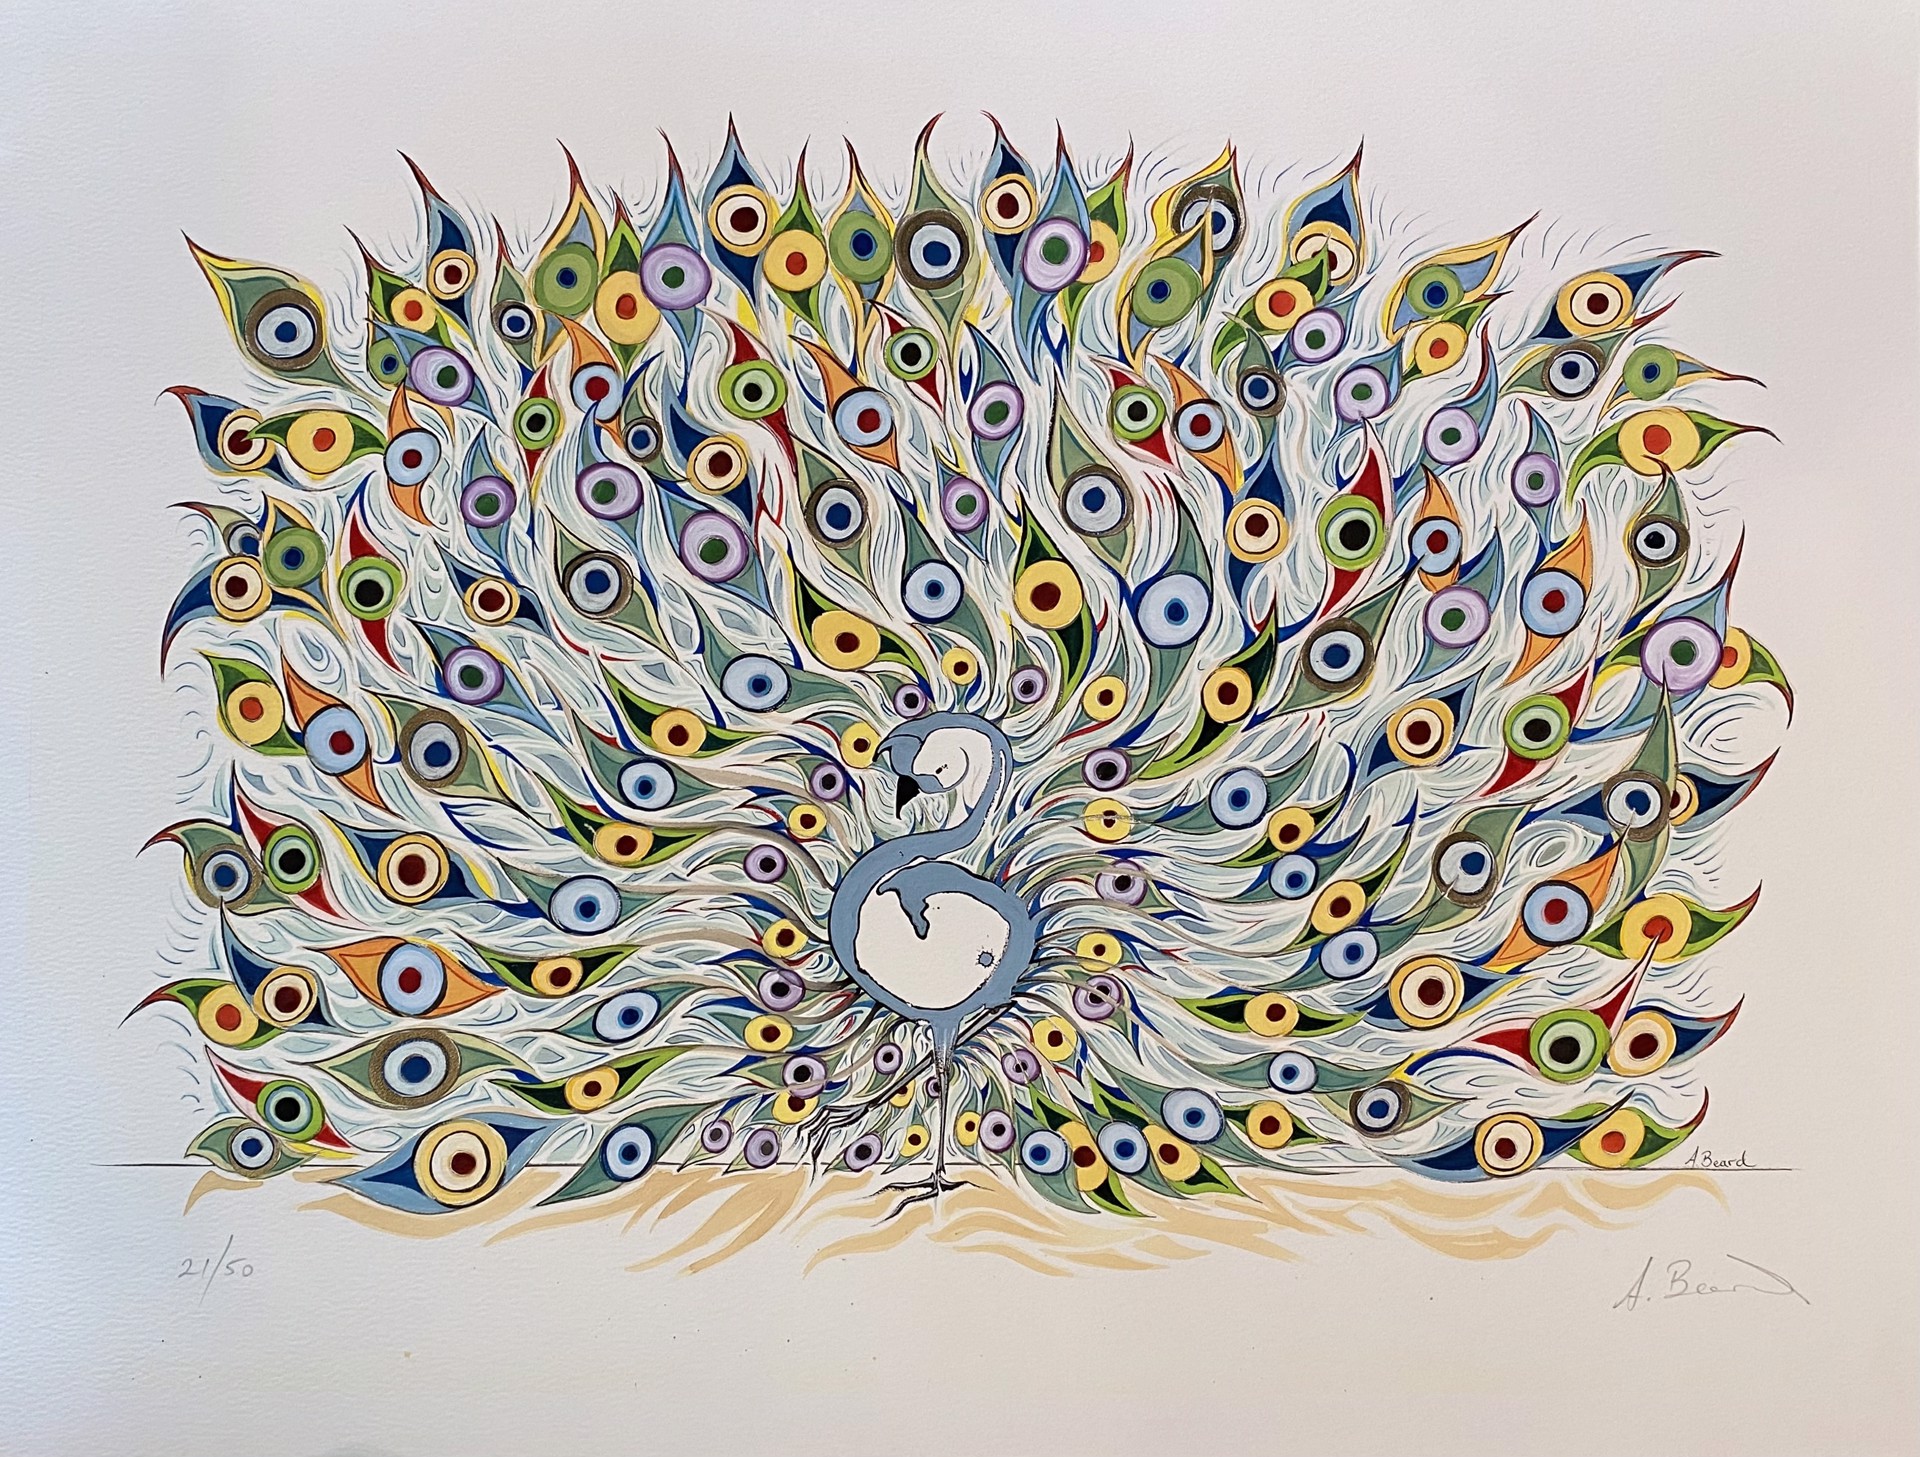 The Peacock by Alex Beard